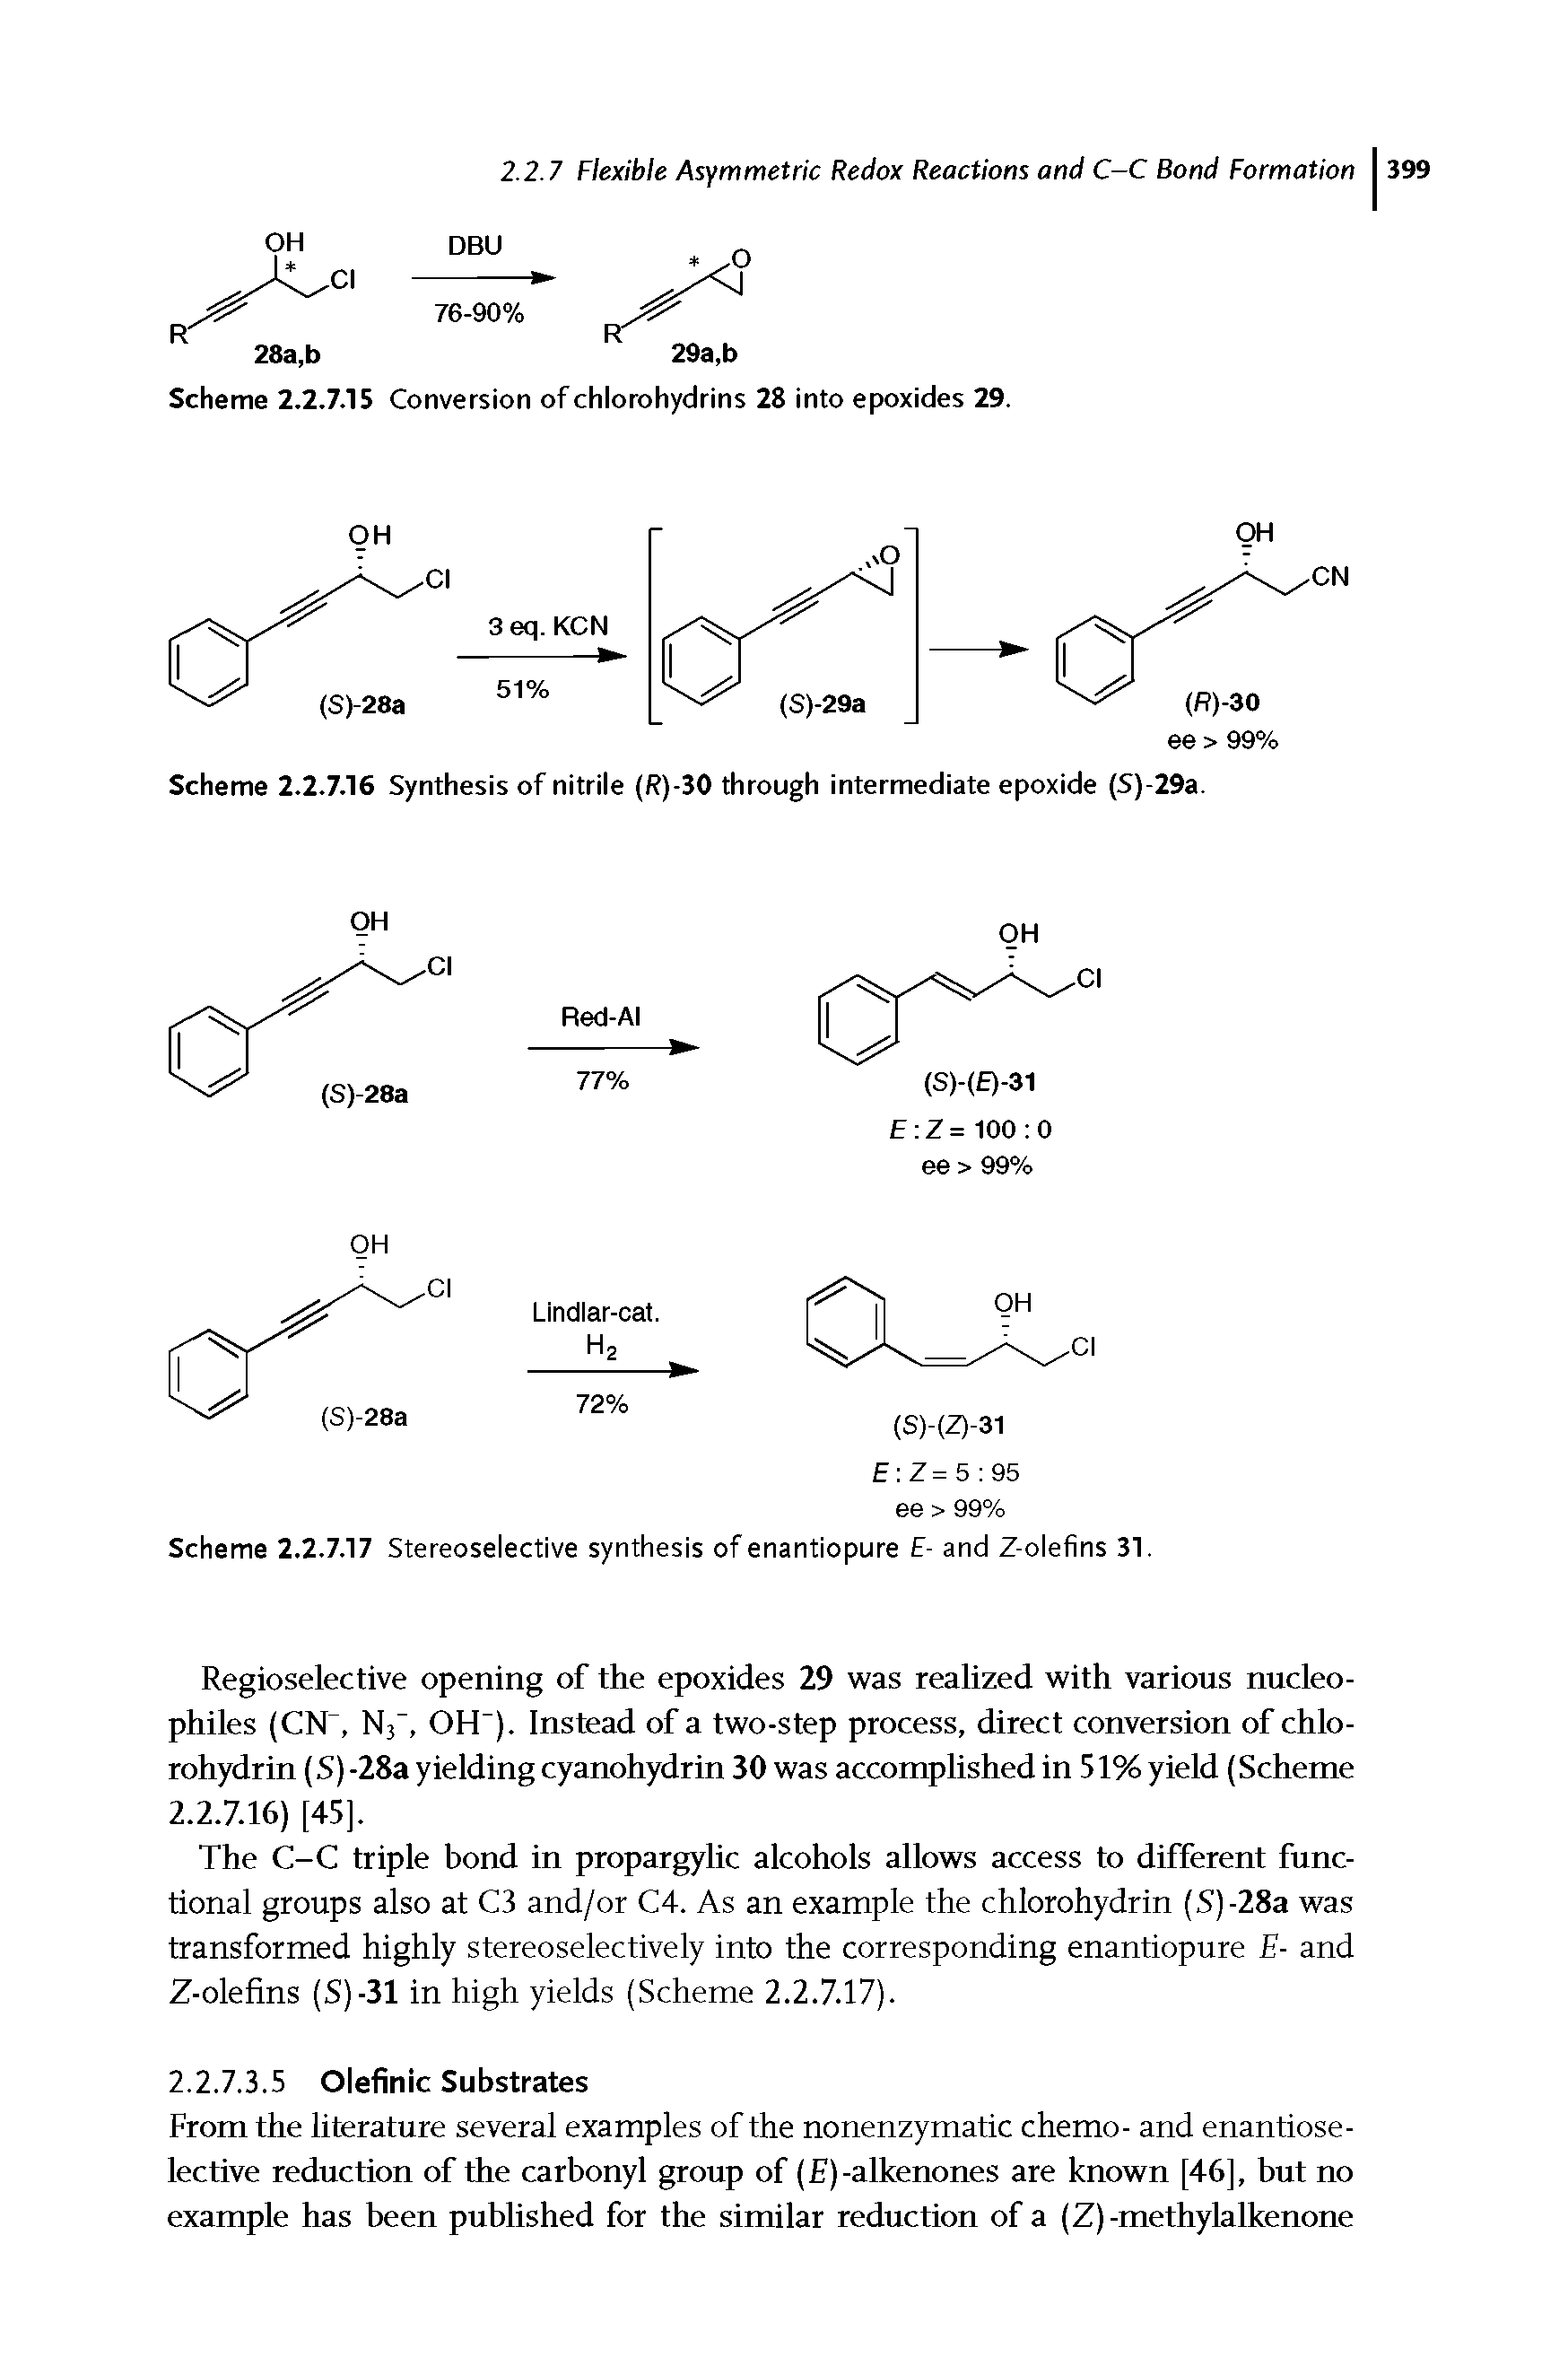 Scheme 2.2.7.16 Synthesis of nitrile (R)-30 through intermediate epoxide (S)-29a.